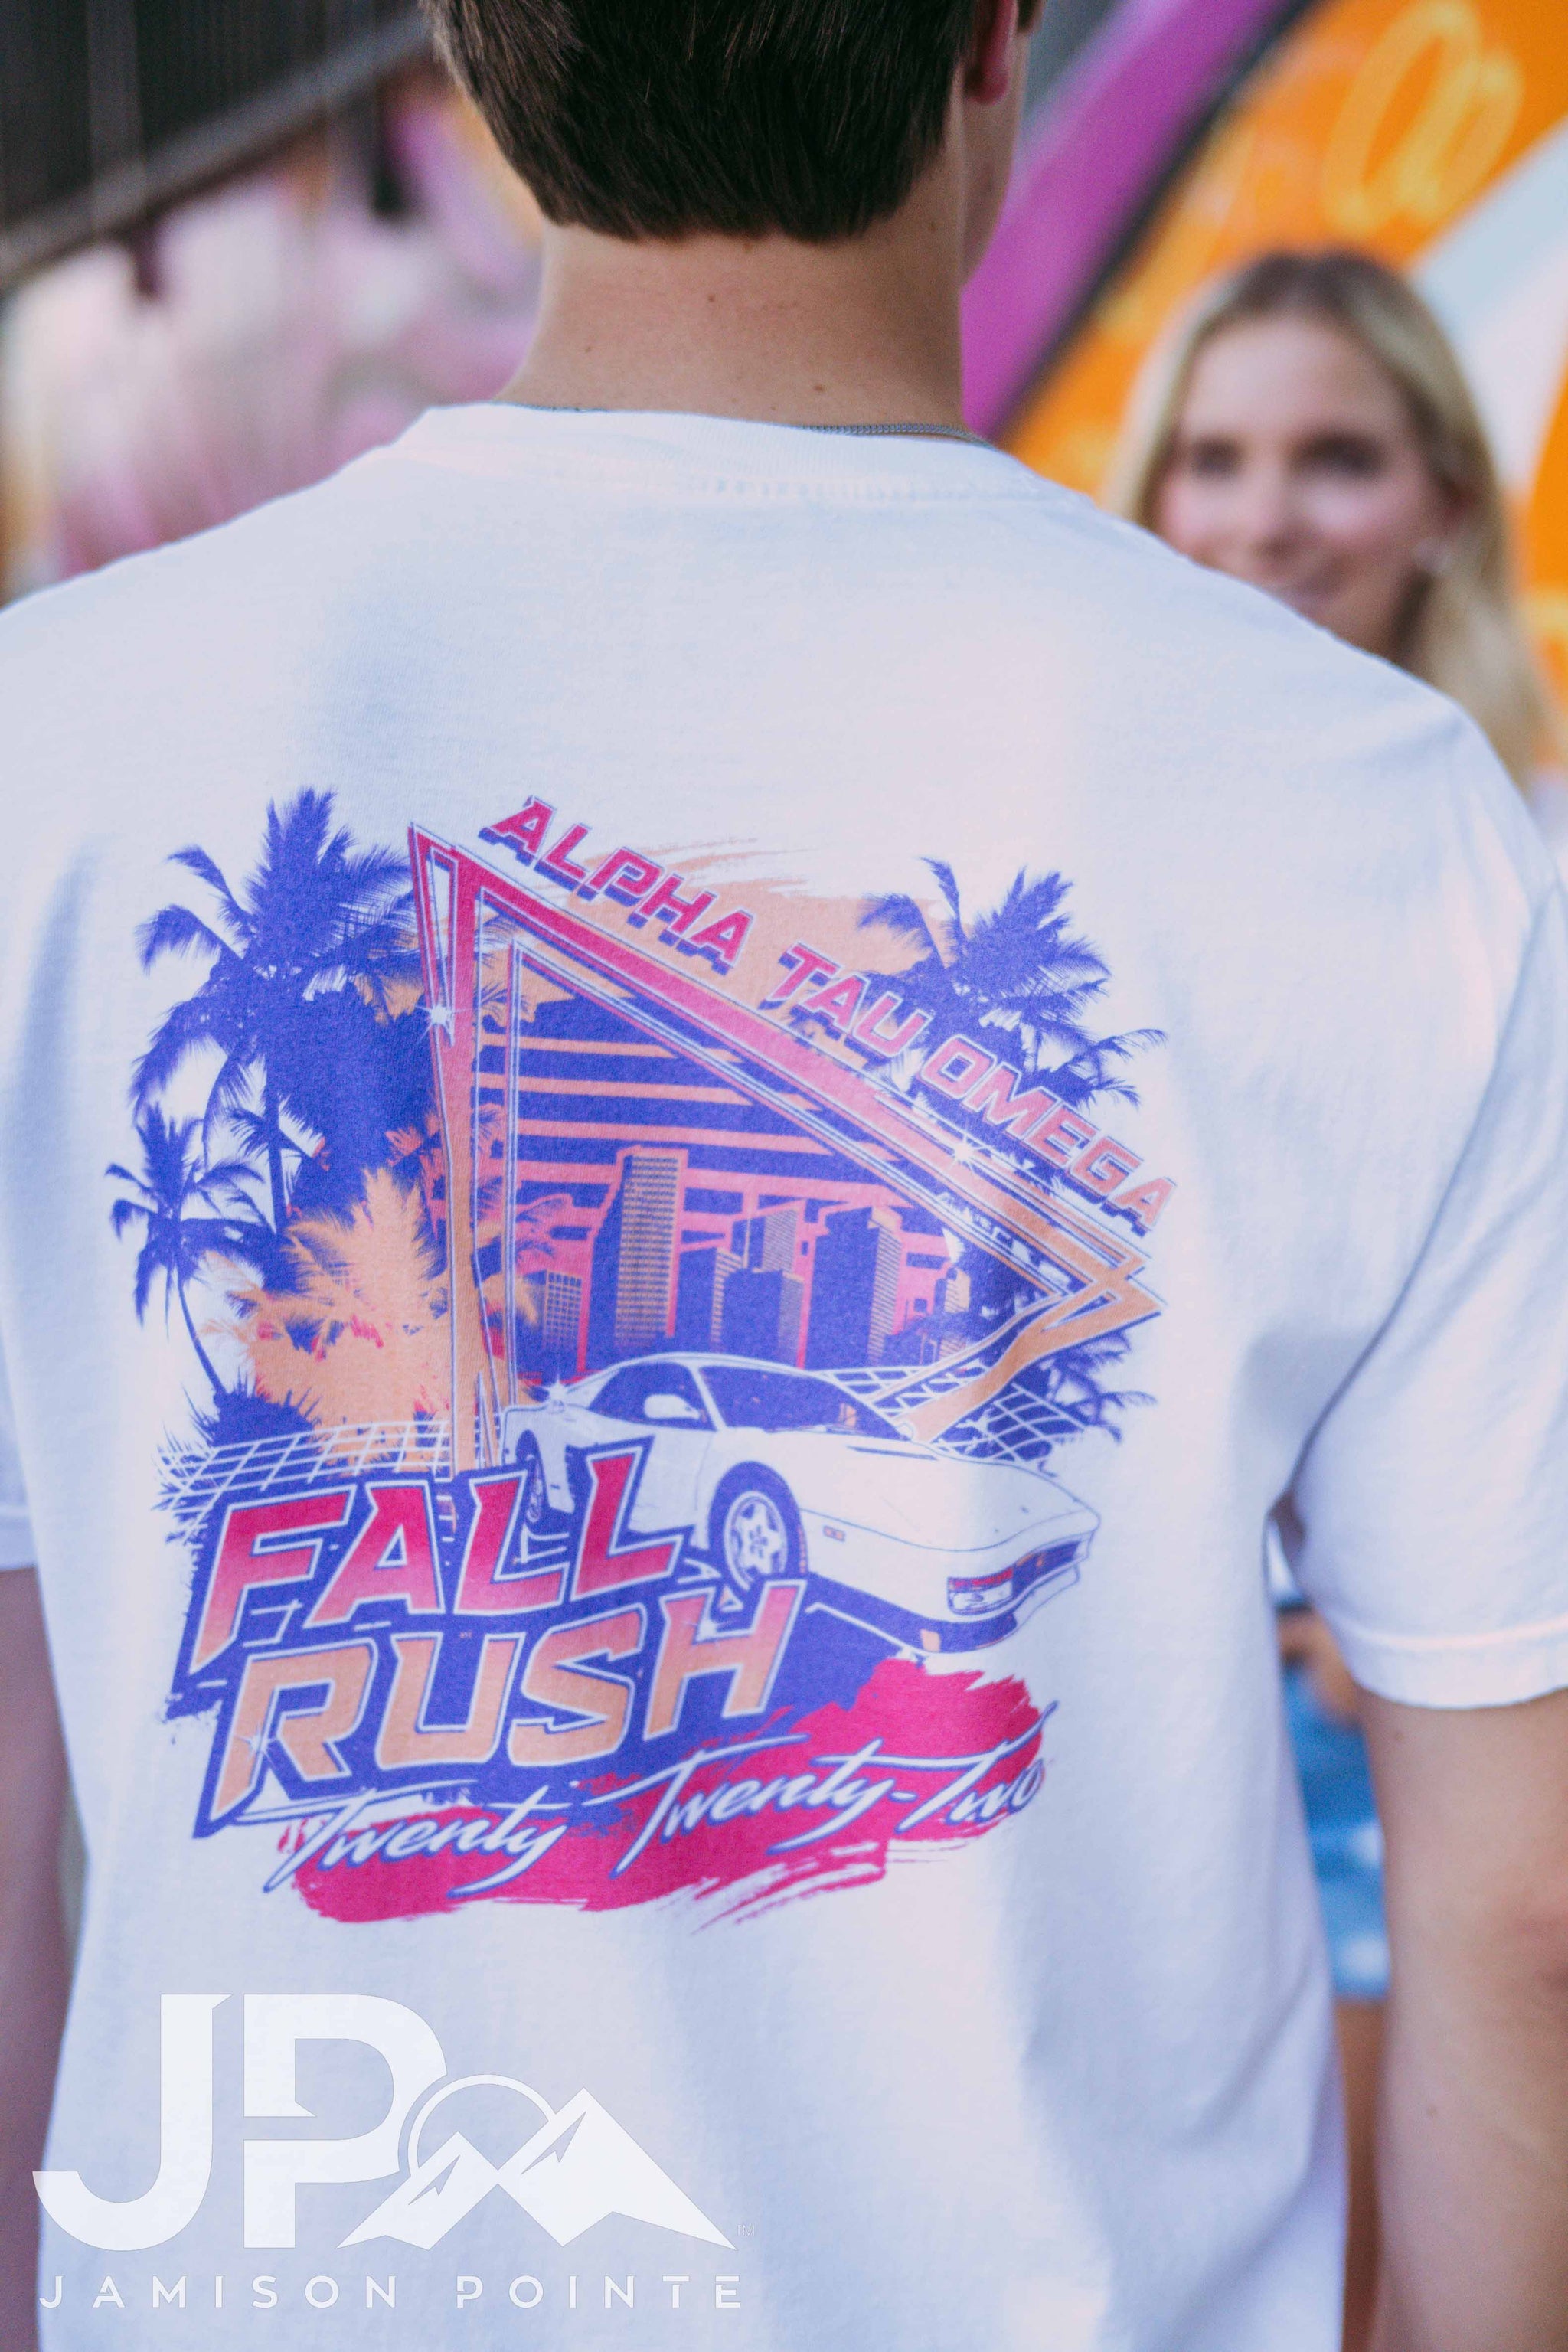 T-shirt 'Miami Vice